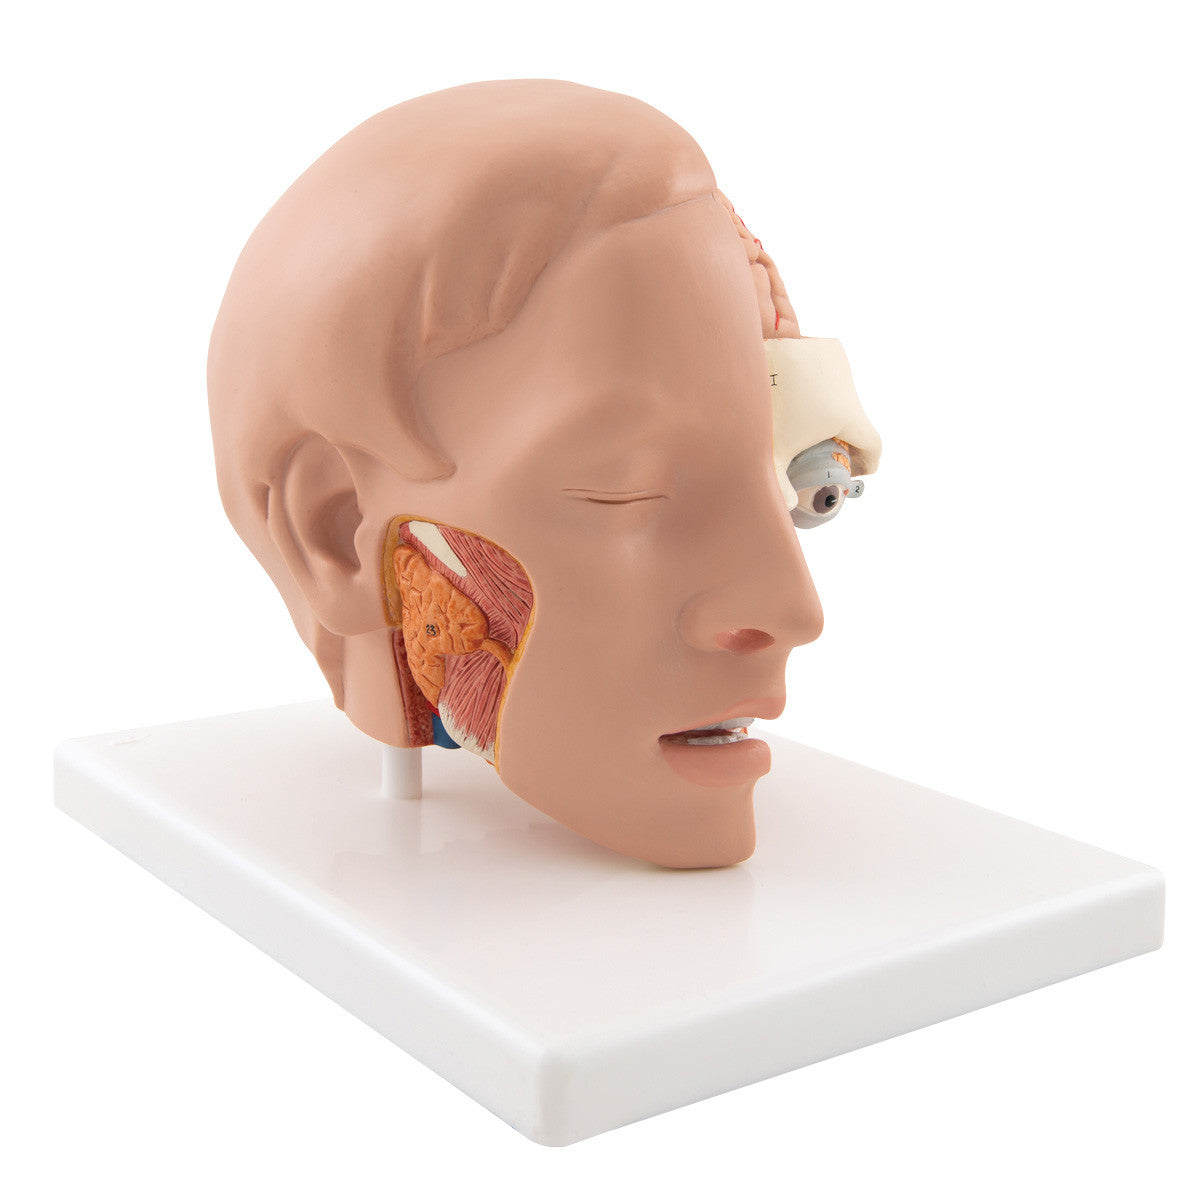 c09-1_02_1200_1200_human-head-model-6-part-3b-smart-anatomy__63448.1589752900.1280.1280.jpg